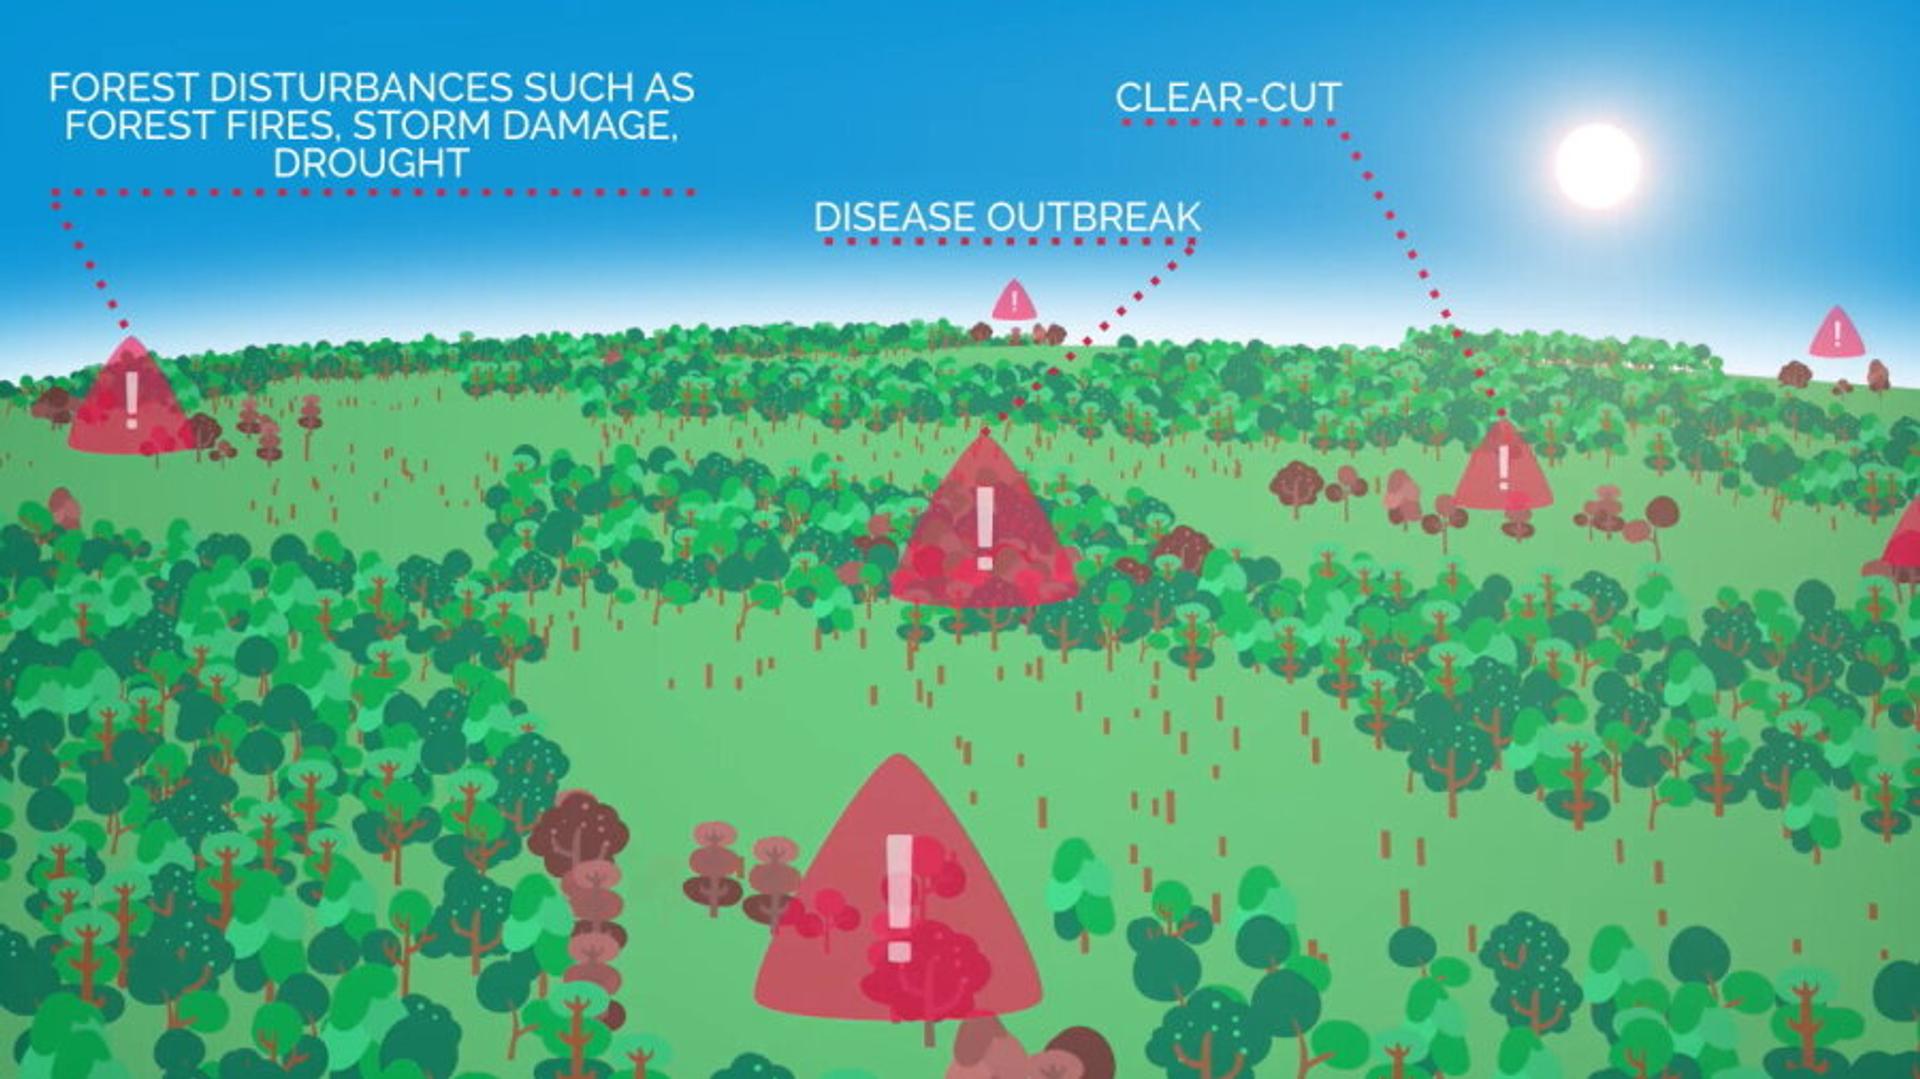 Digital showcasing of disease outbreak in forest